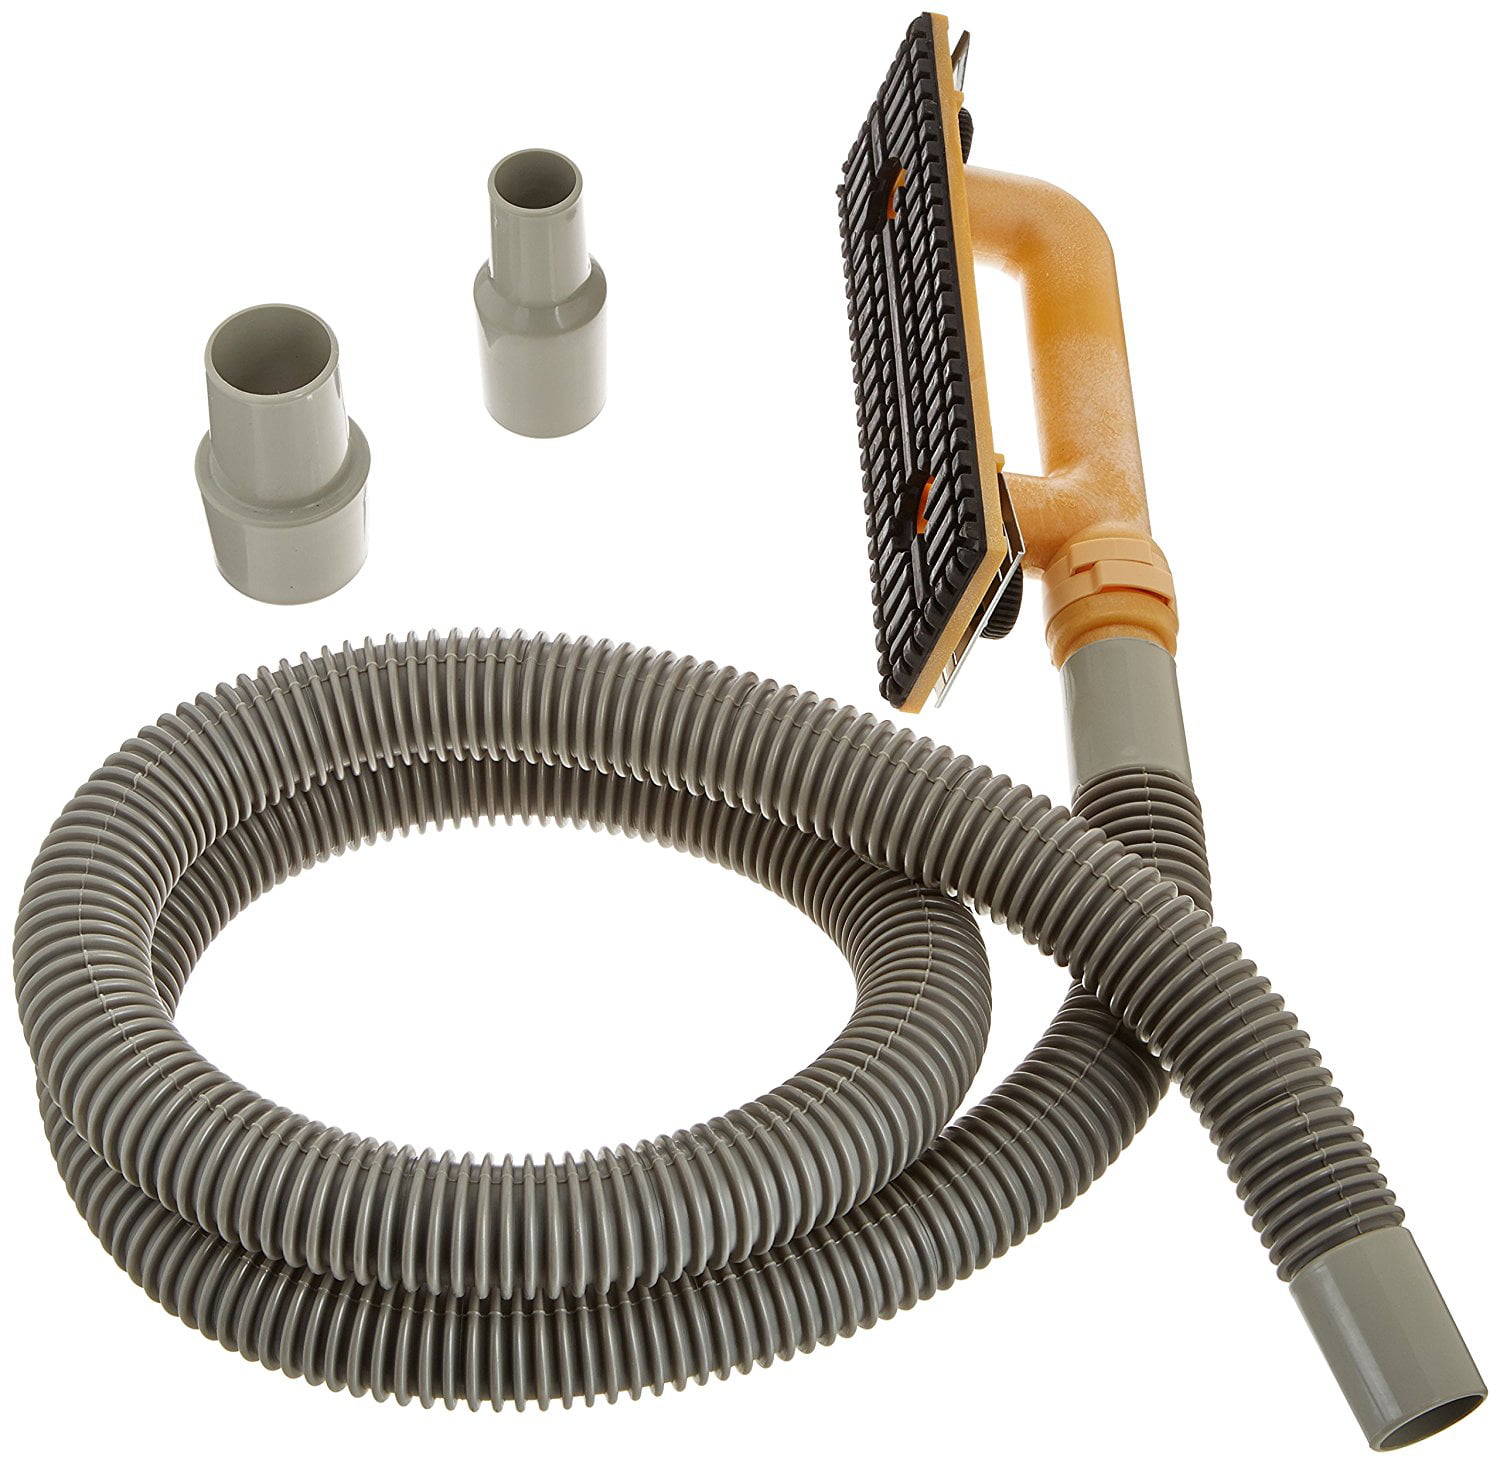 Hyde Tools 09165 Dust-Free Drywall Vacuum Hand Sander with 6-Foot Hose 